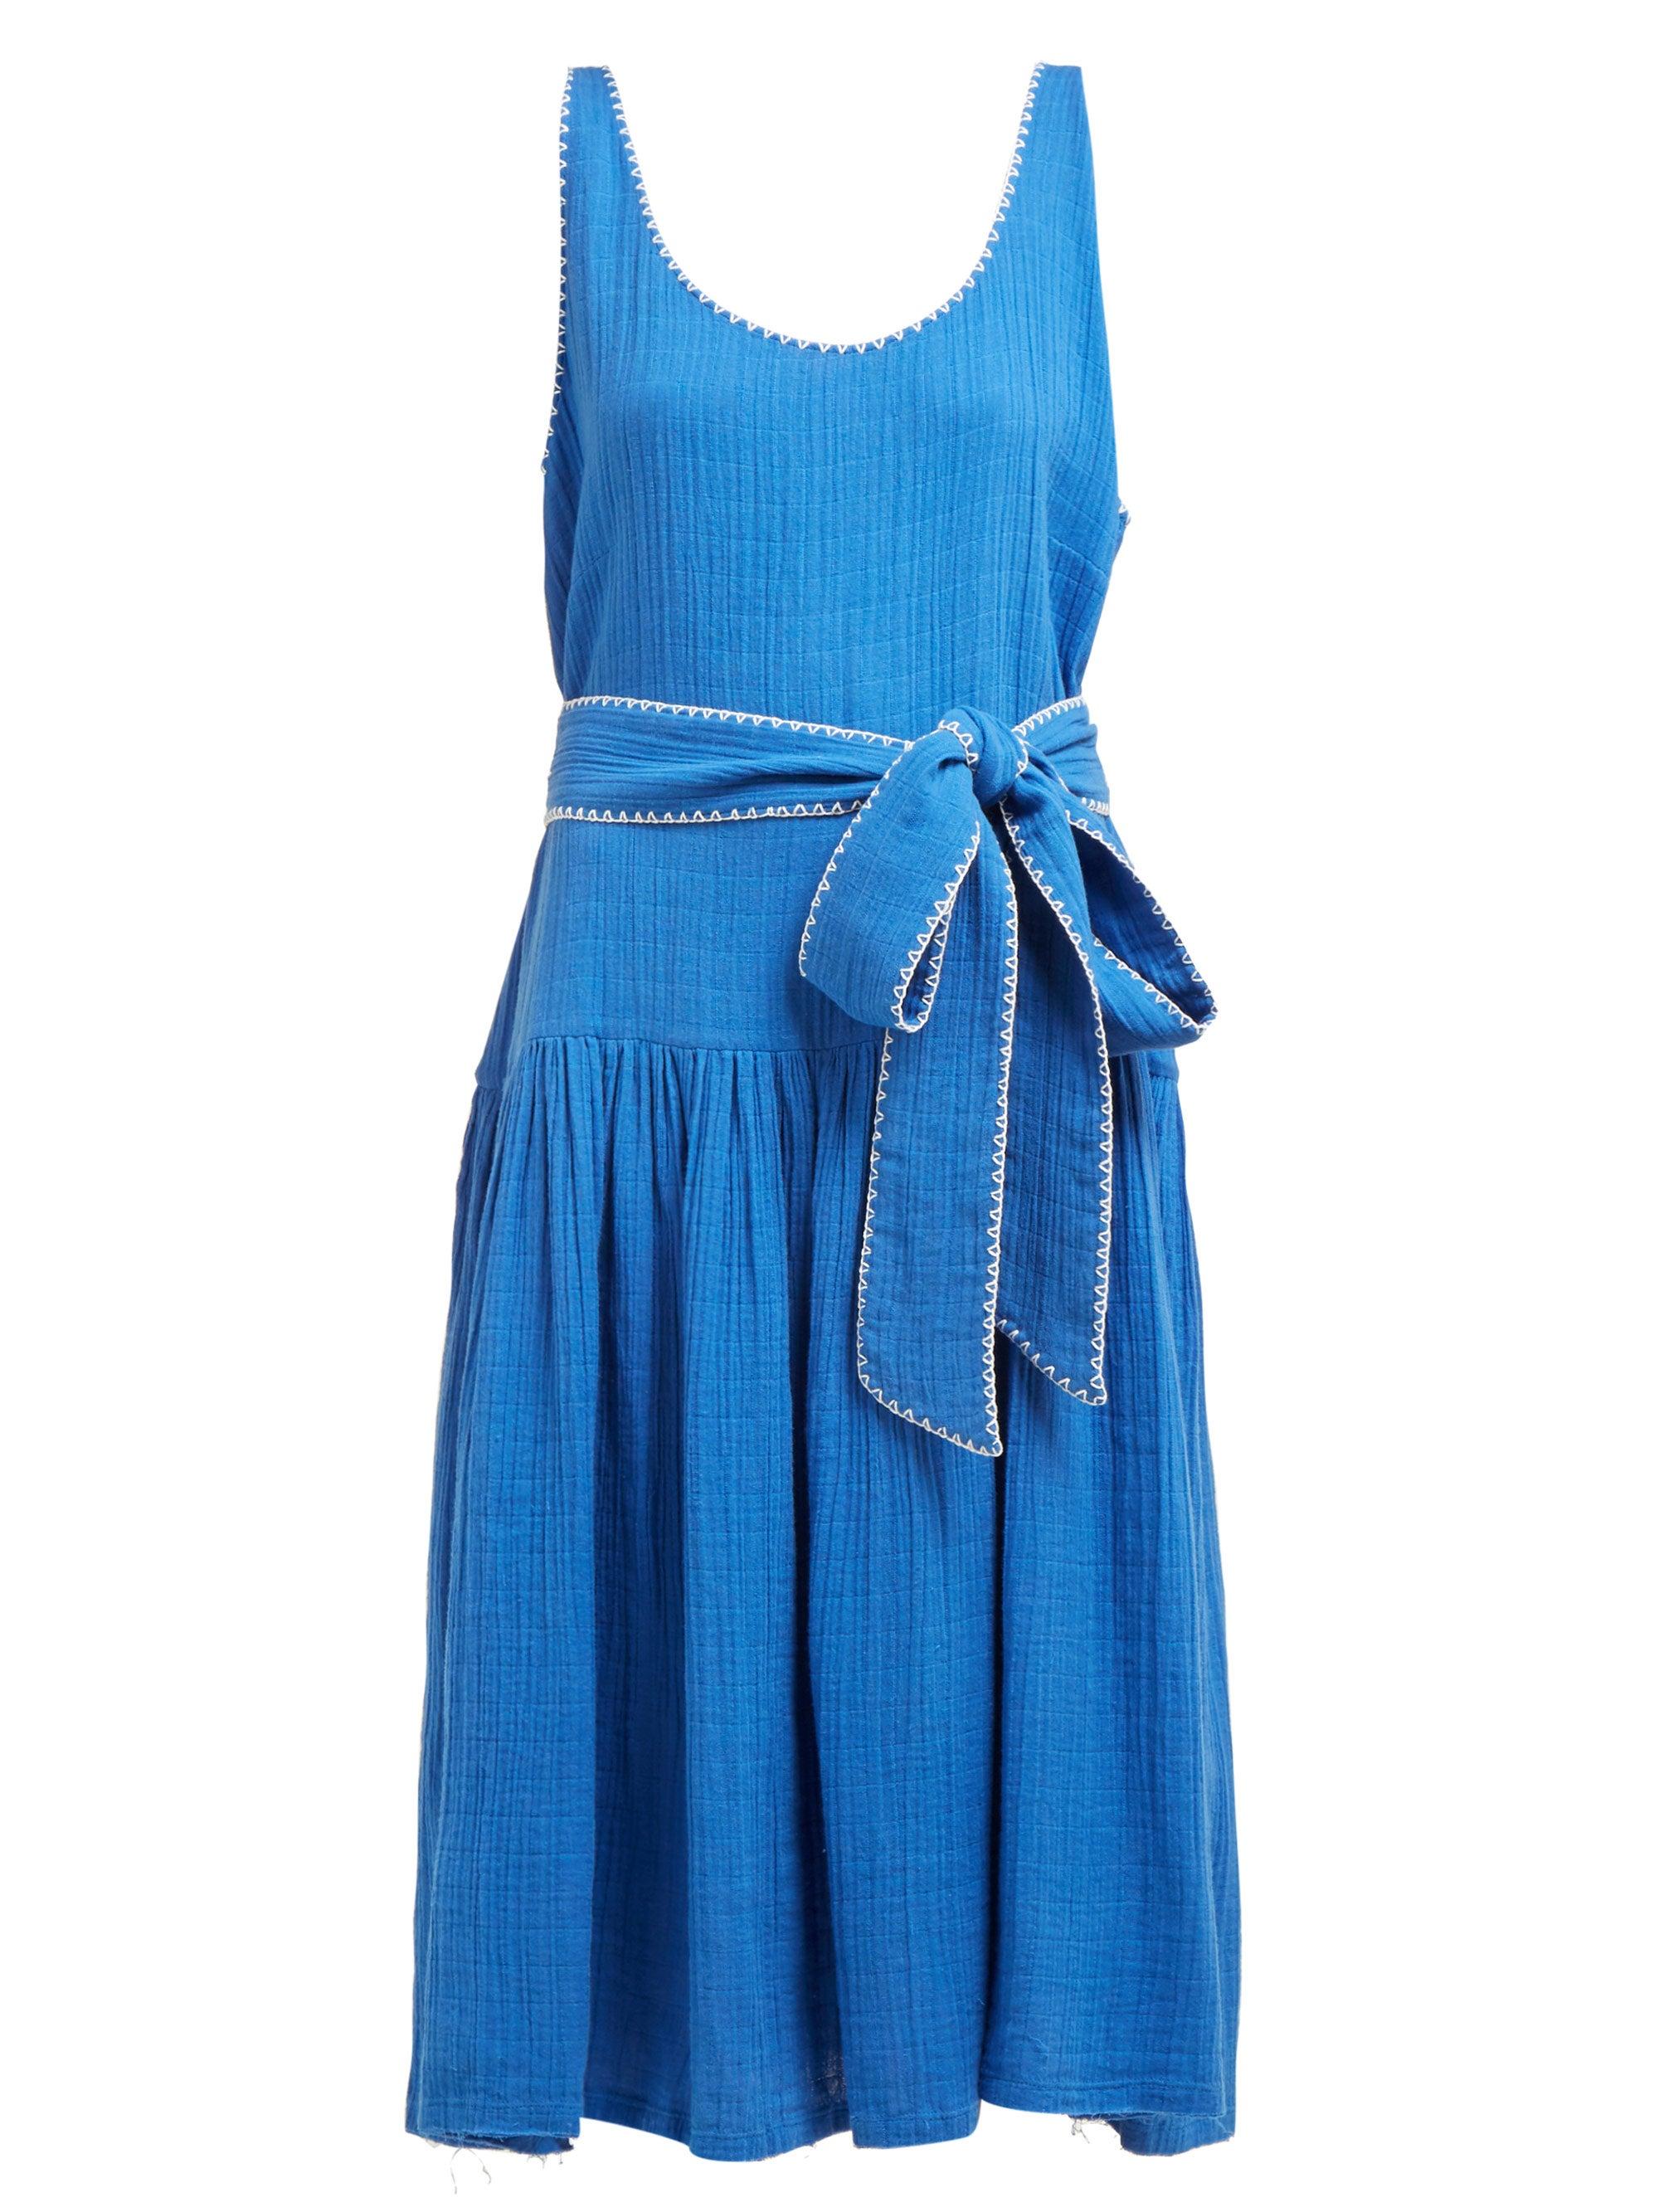 Anaak Camilla Gathered Cotton-gauze Dress in Blue - Lyst